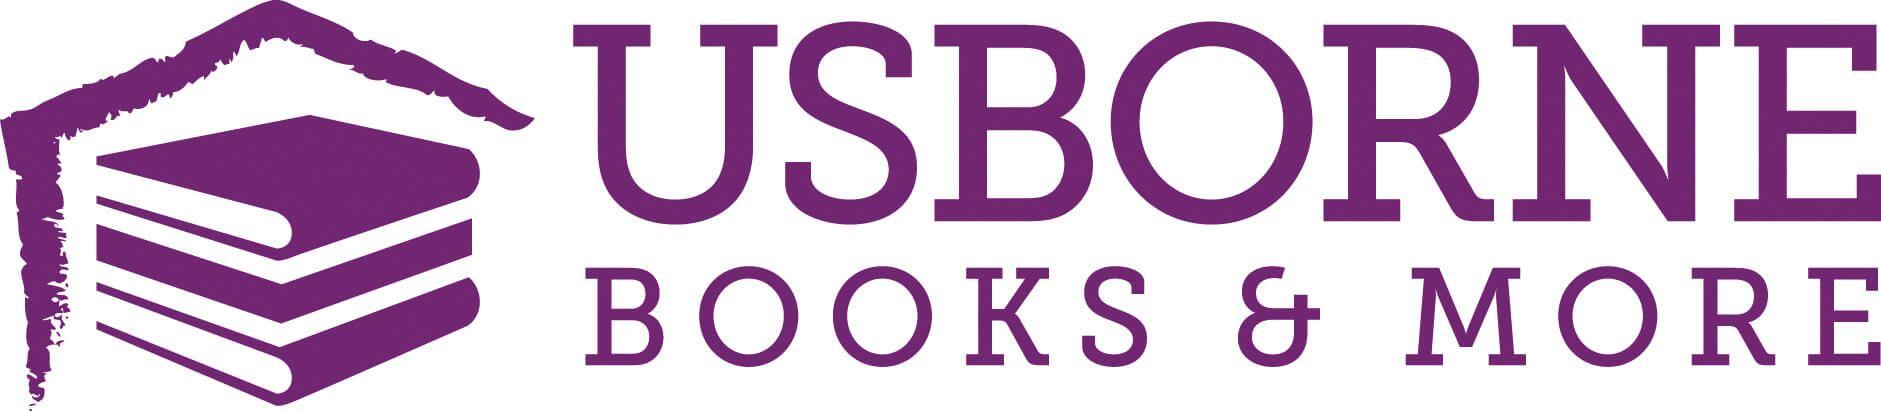 Usborne Books Logo - Usborne Books & More - Tucson Values Teachers